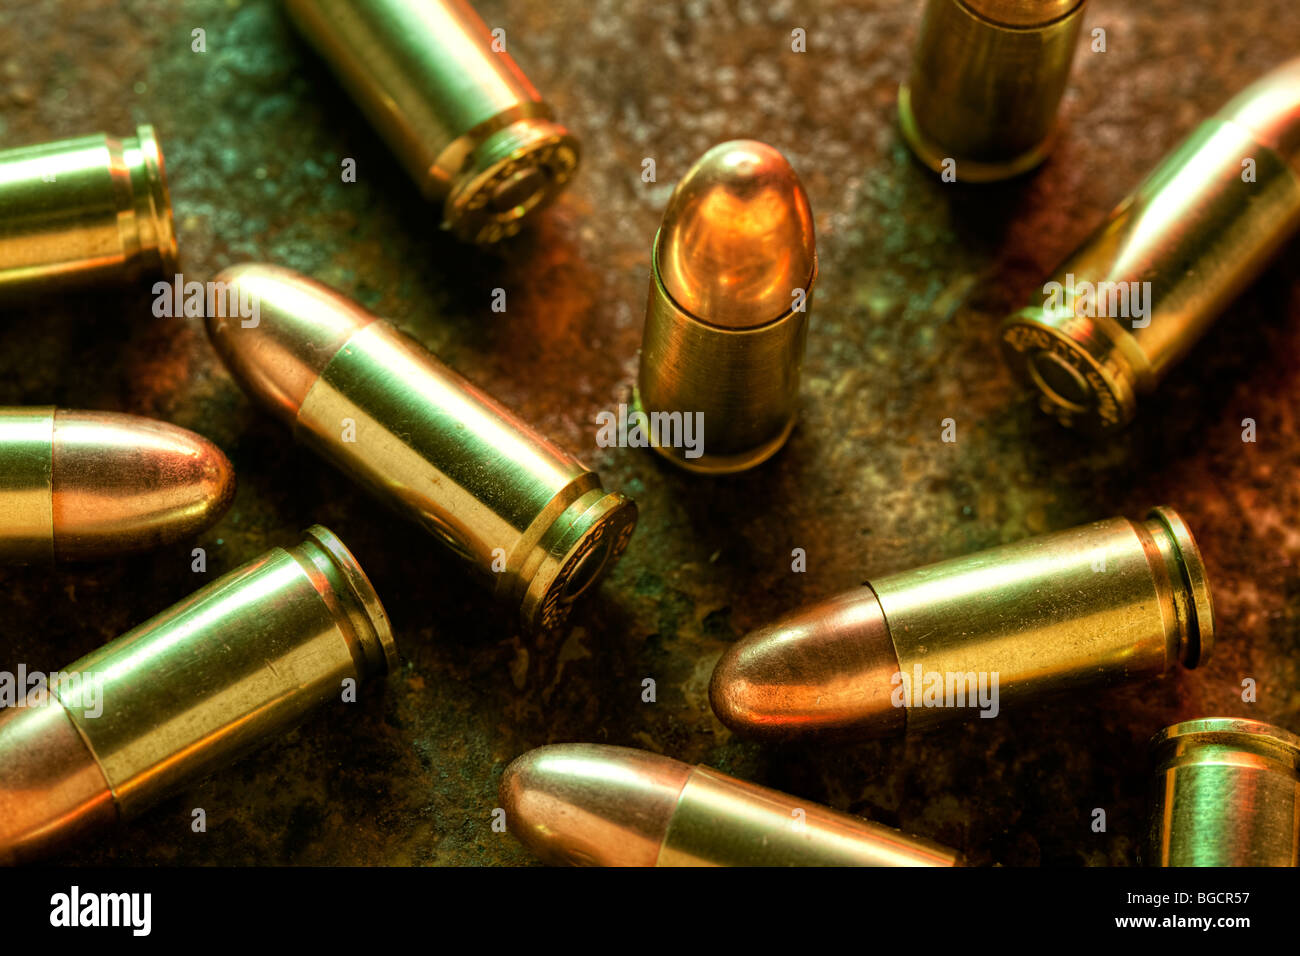 9mm cartridges Stock Photo